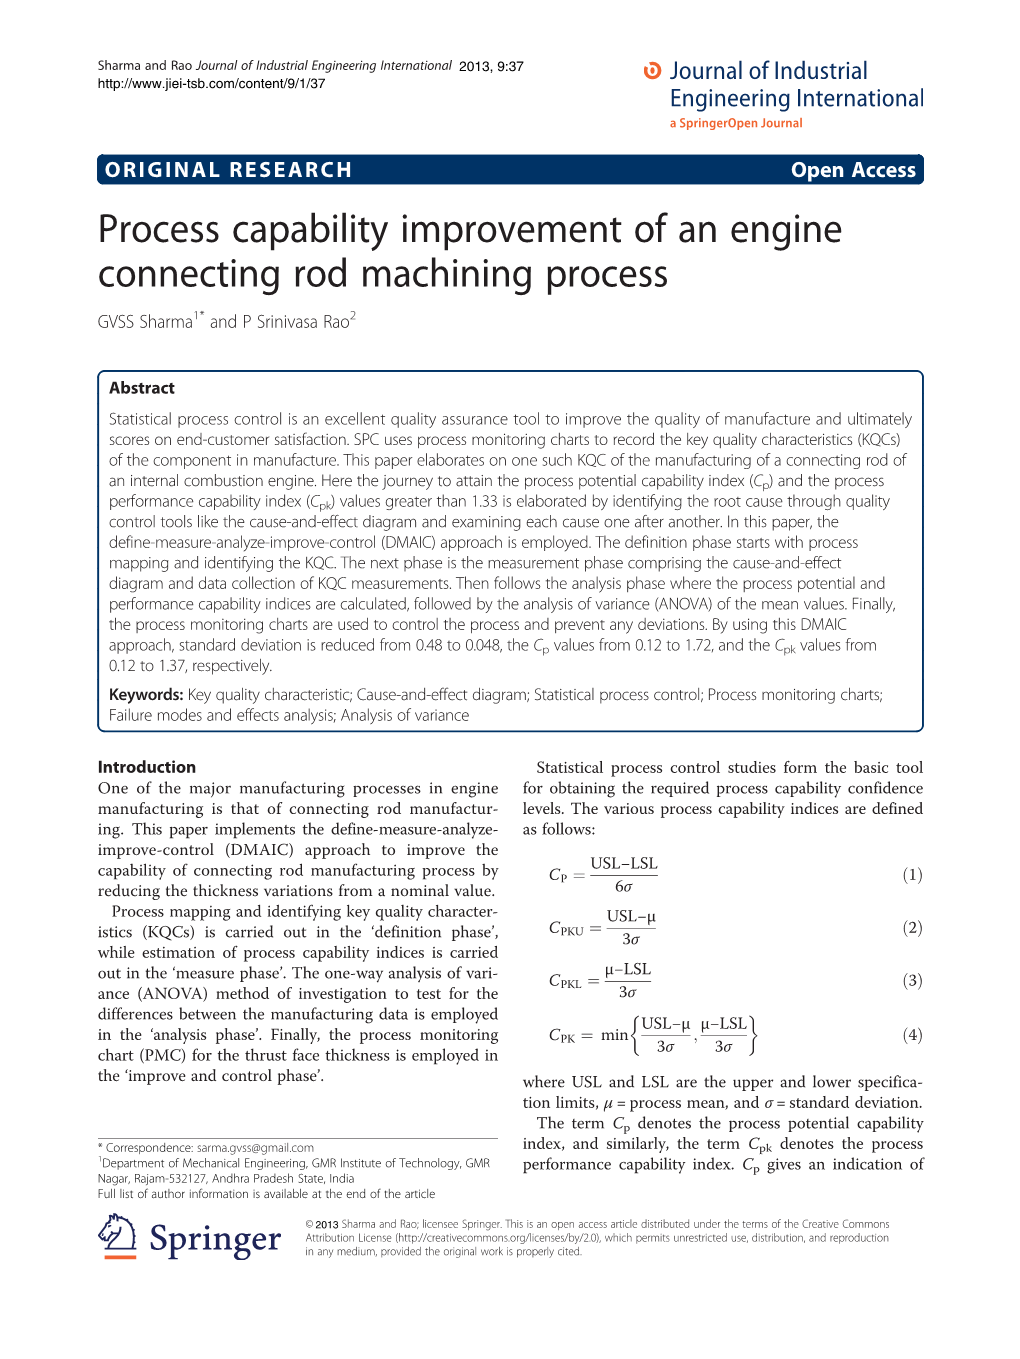 Process Capability Improvement of an Engine Connecting Rod Machining Process GVSS Sharma1* and P Srinivasa Rao2